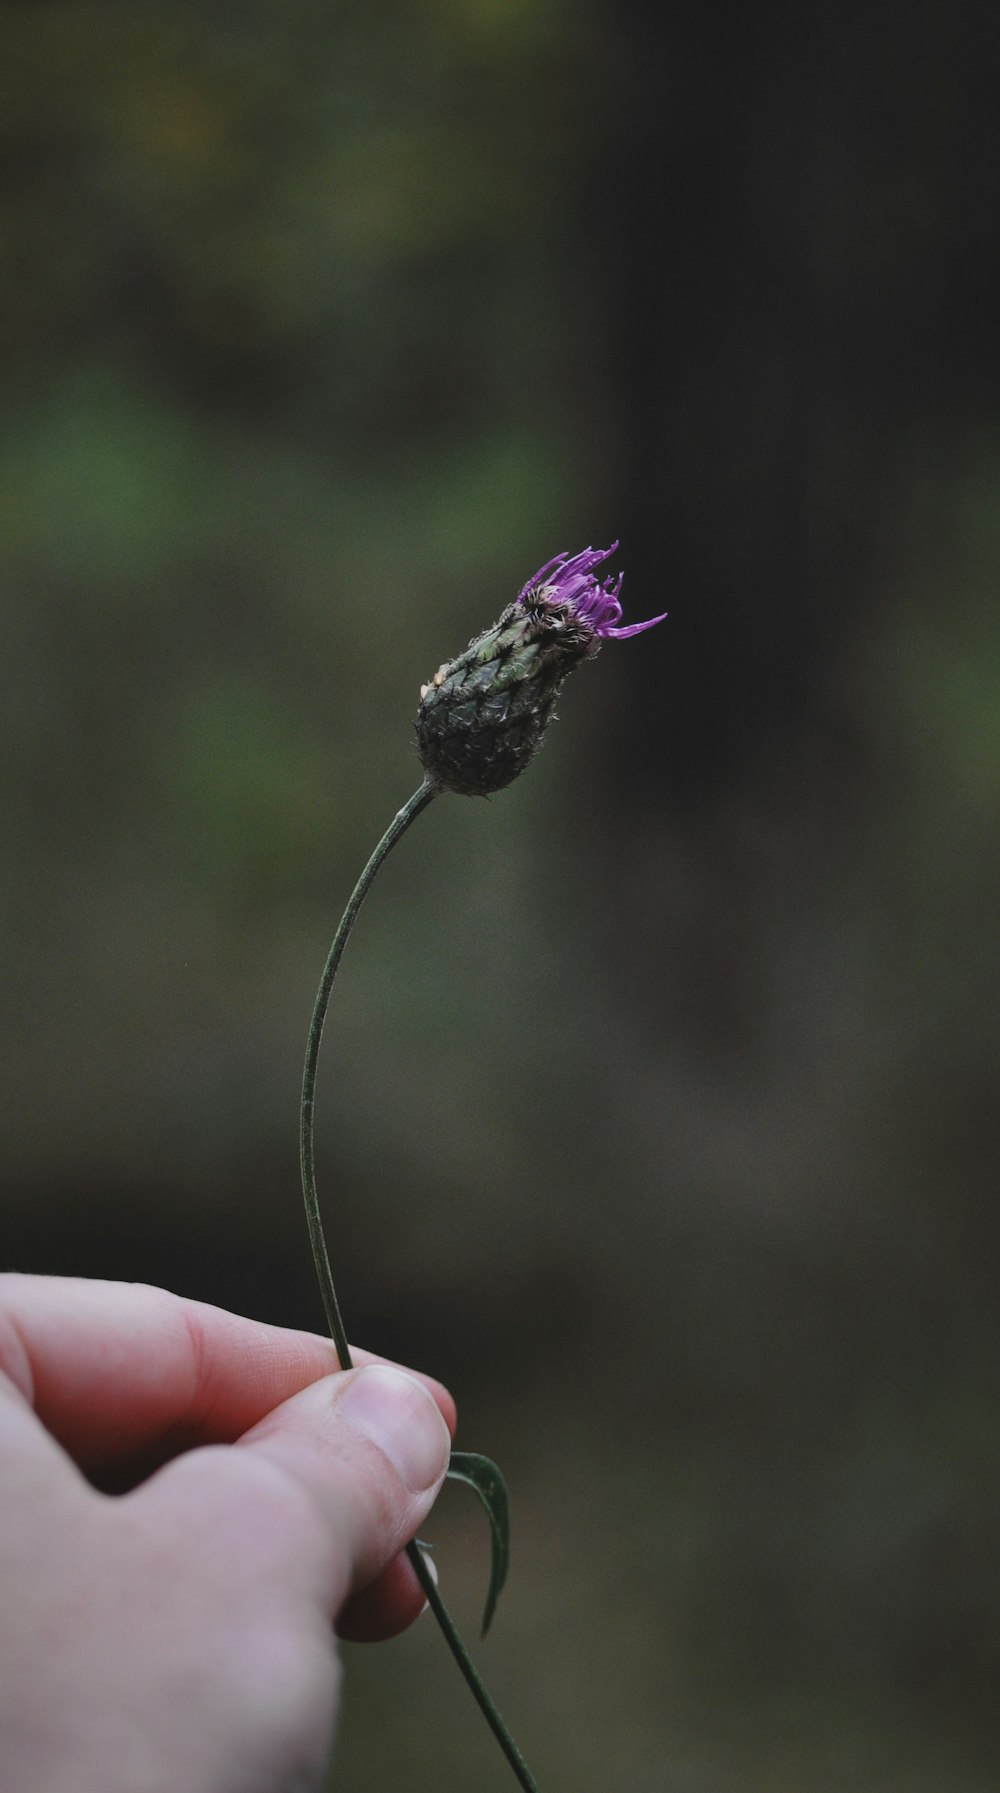 a hand holding a purple flower